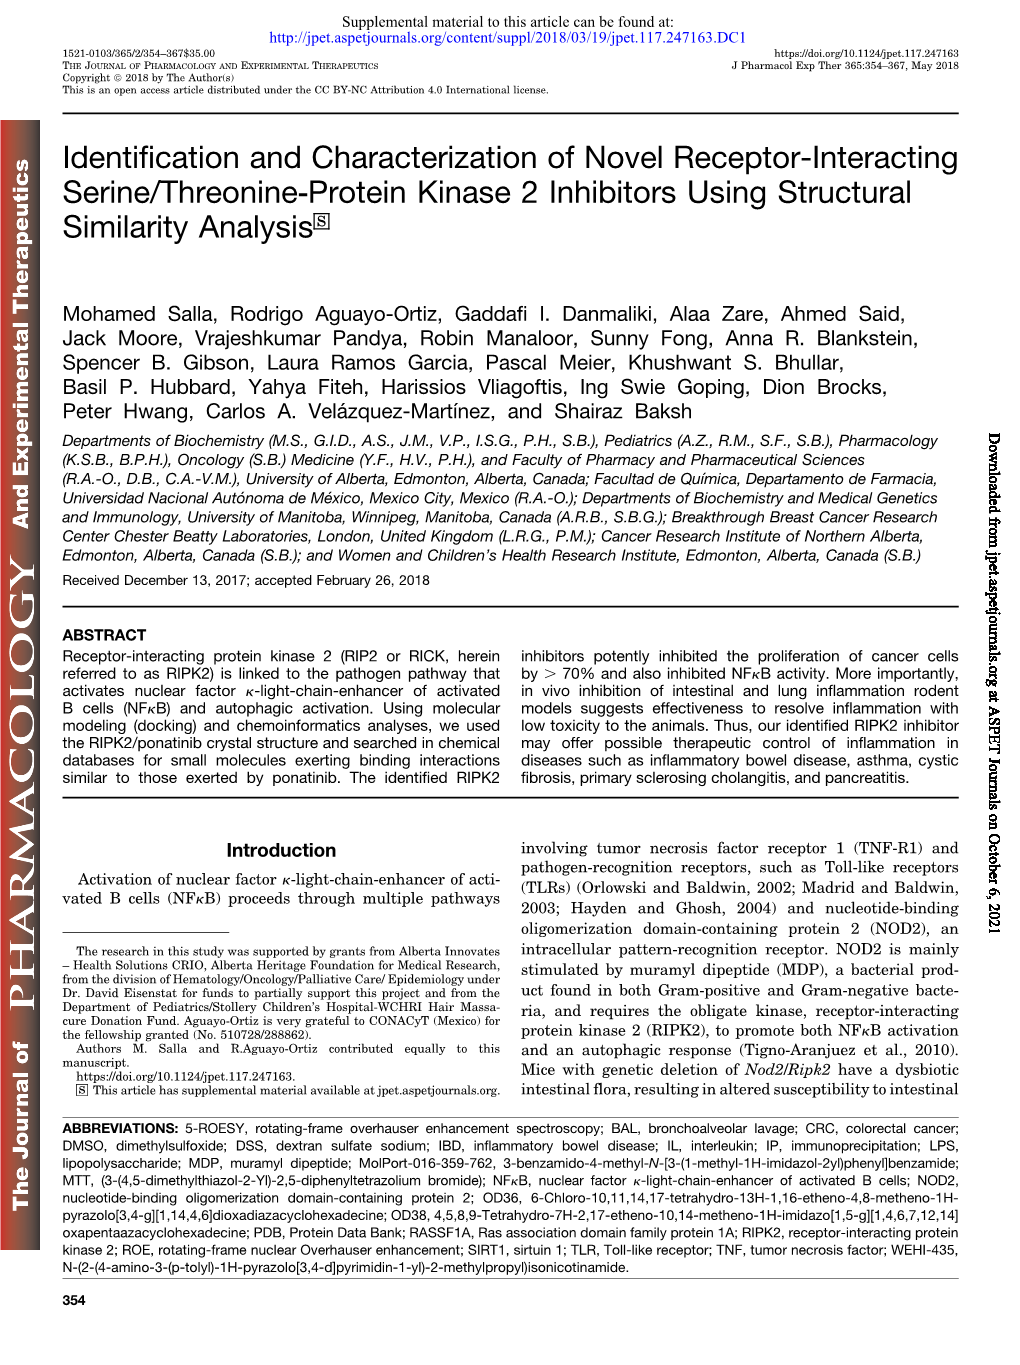 Identification and Characterization of Novel Receptor-Interacting Serine/Threonine‐Protein Kinase 2 Inhibitors Using Structural Similarity Analysis S